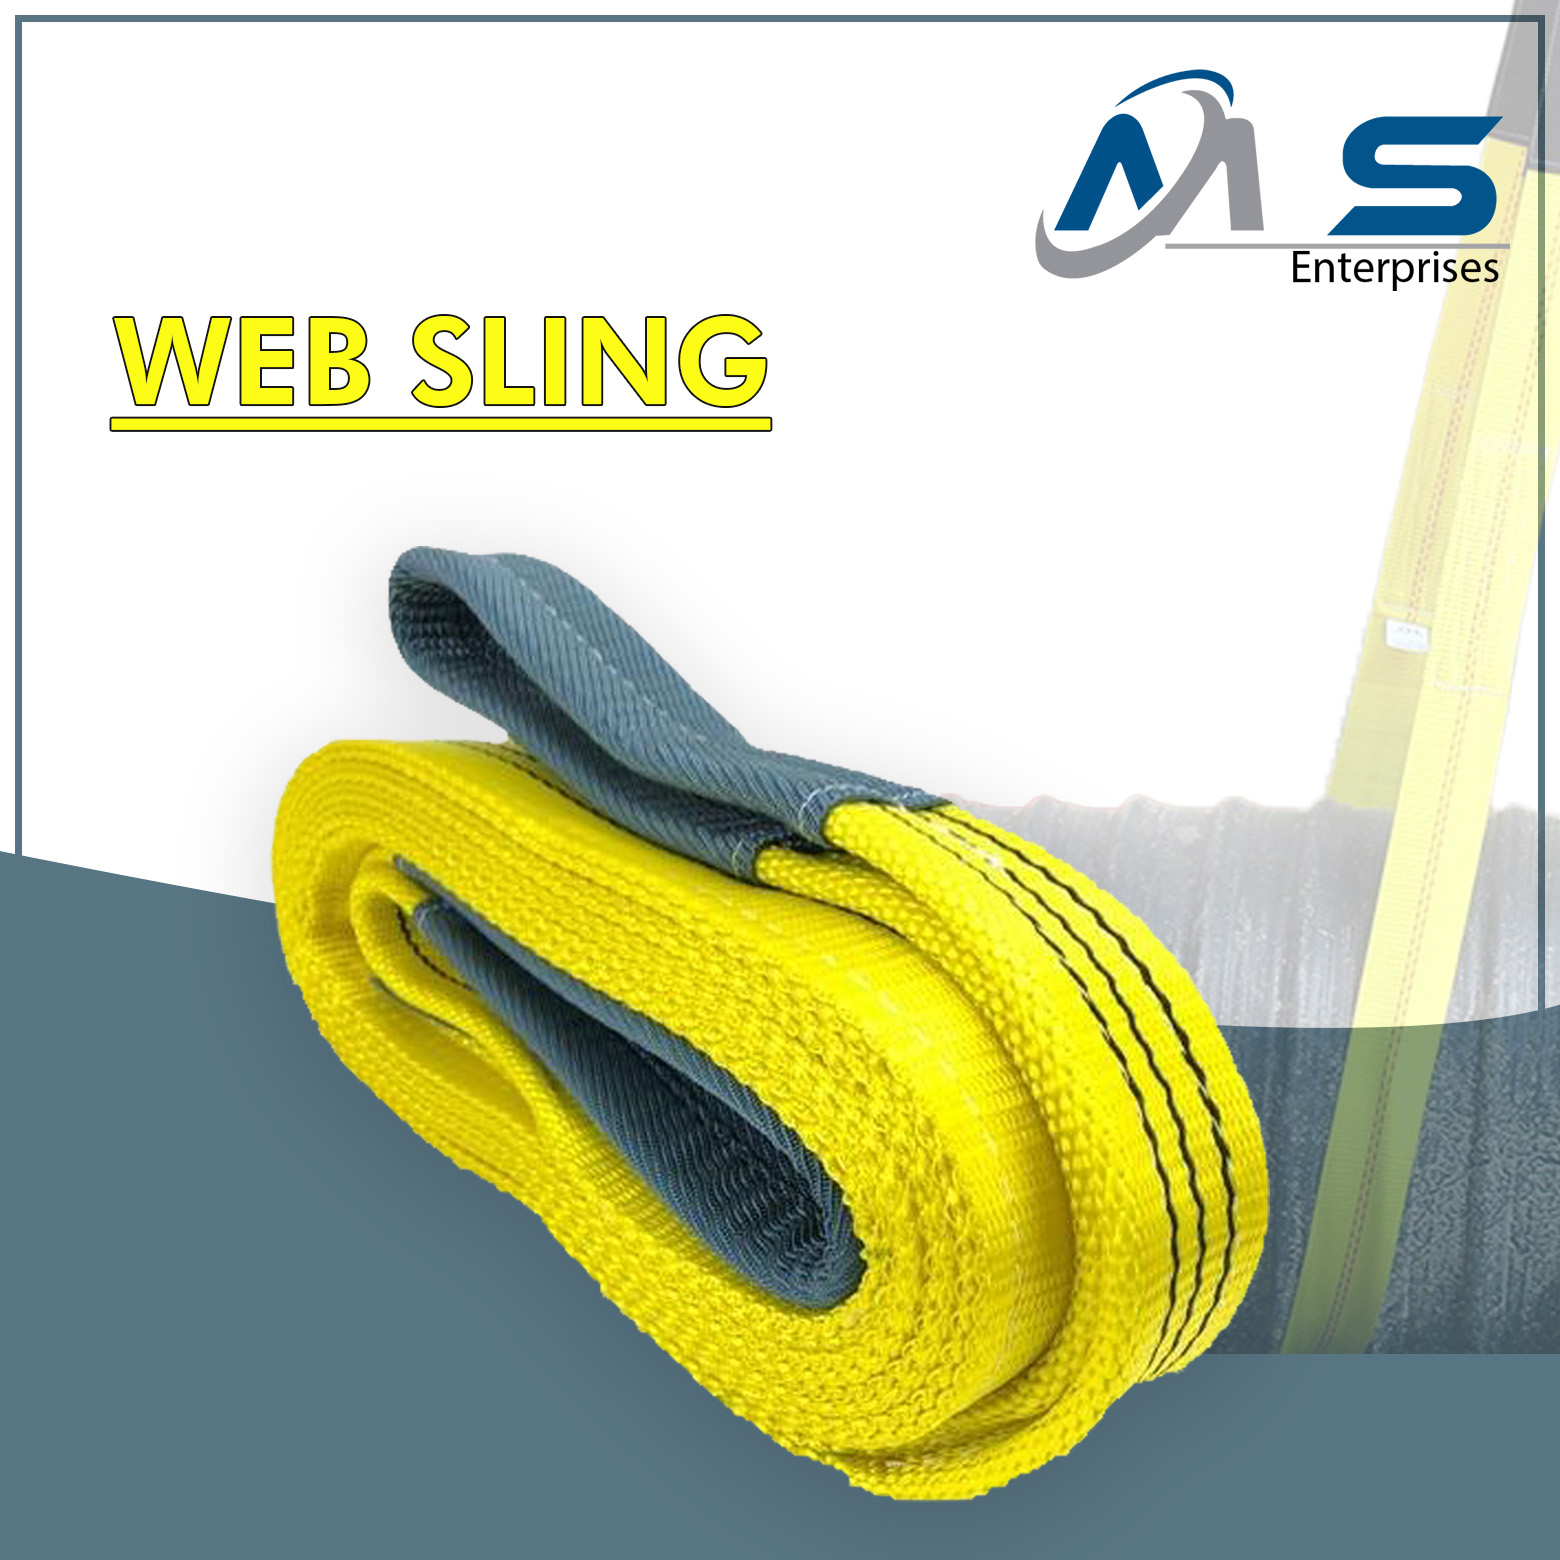 Web Sling